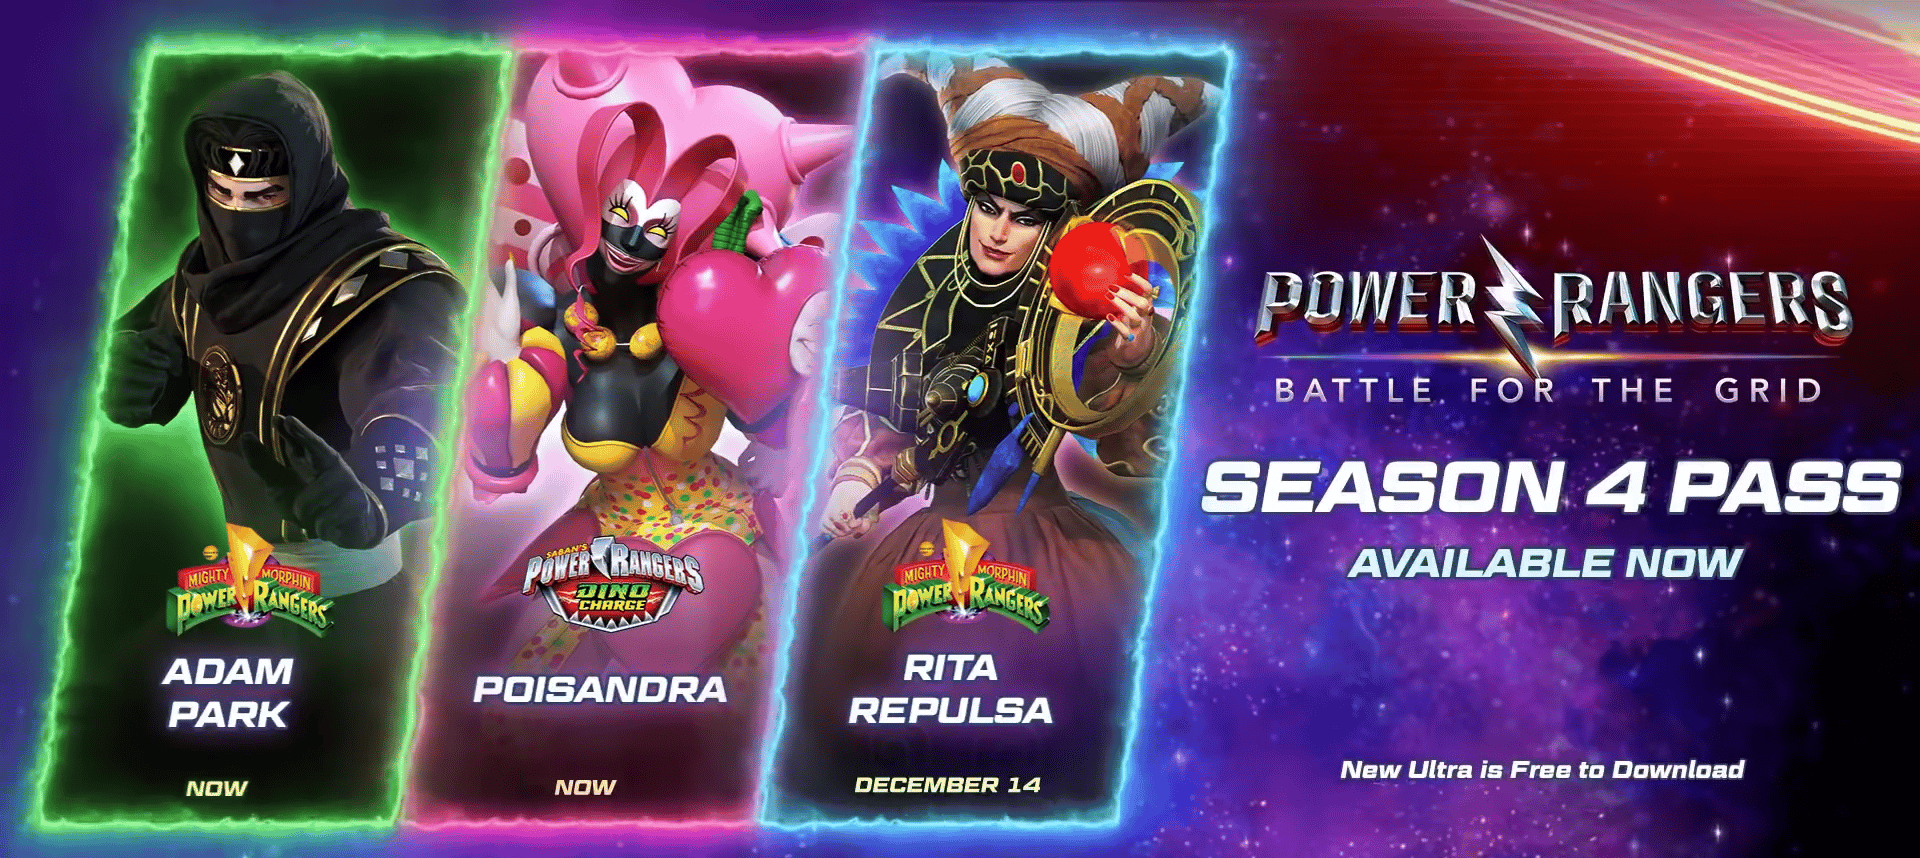 Power Rangers: Battle For The Grid – Rita Repulsa DLC – December 14th 2021